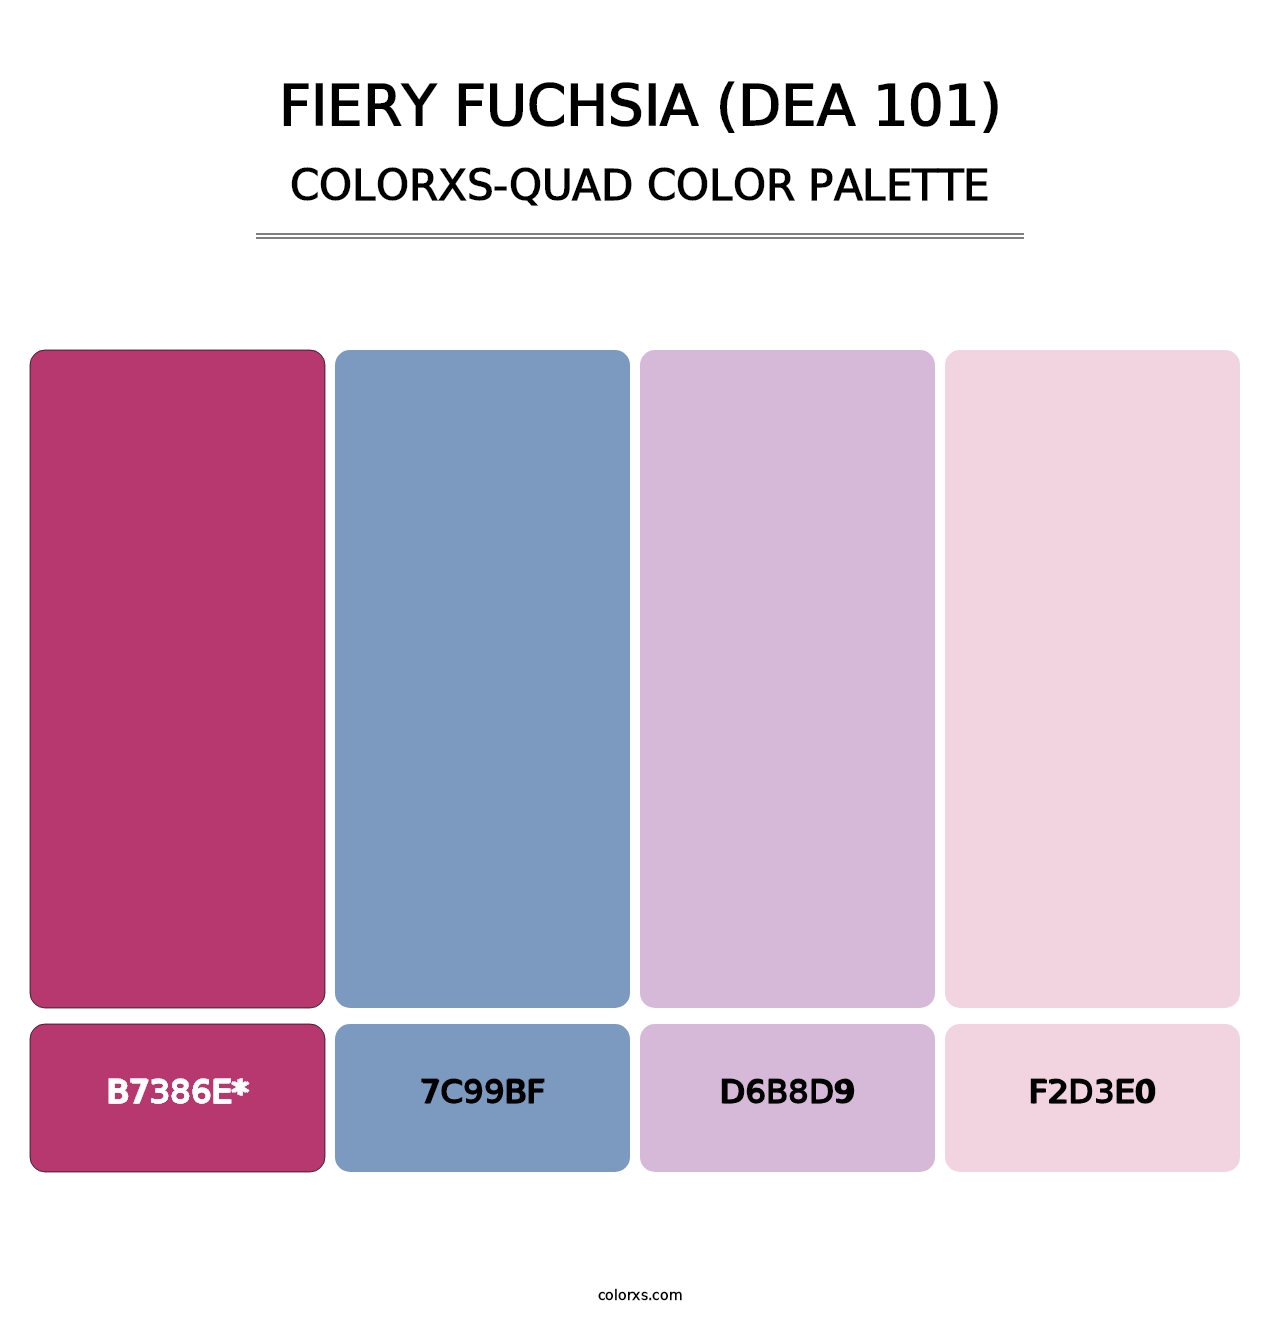 Fiery Fuchsia (DEA 101) - Colorxs Quad Palette